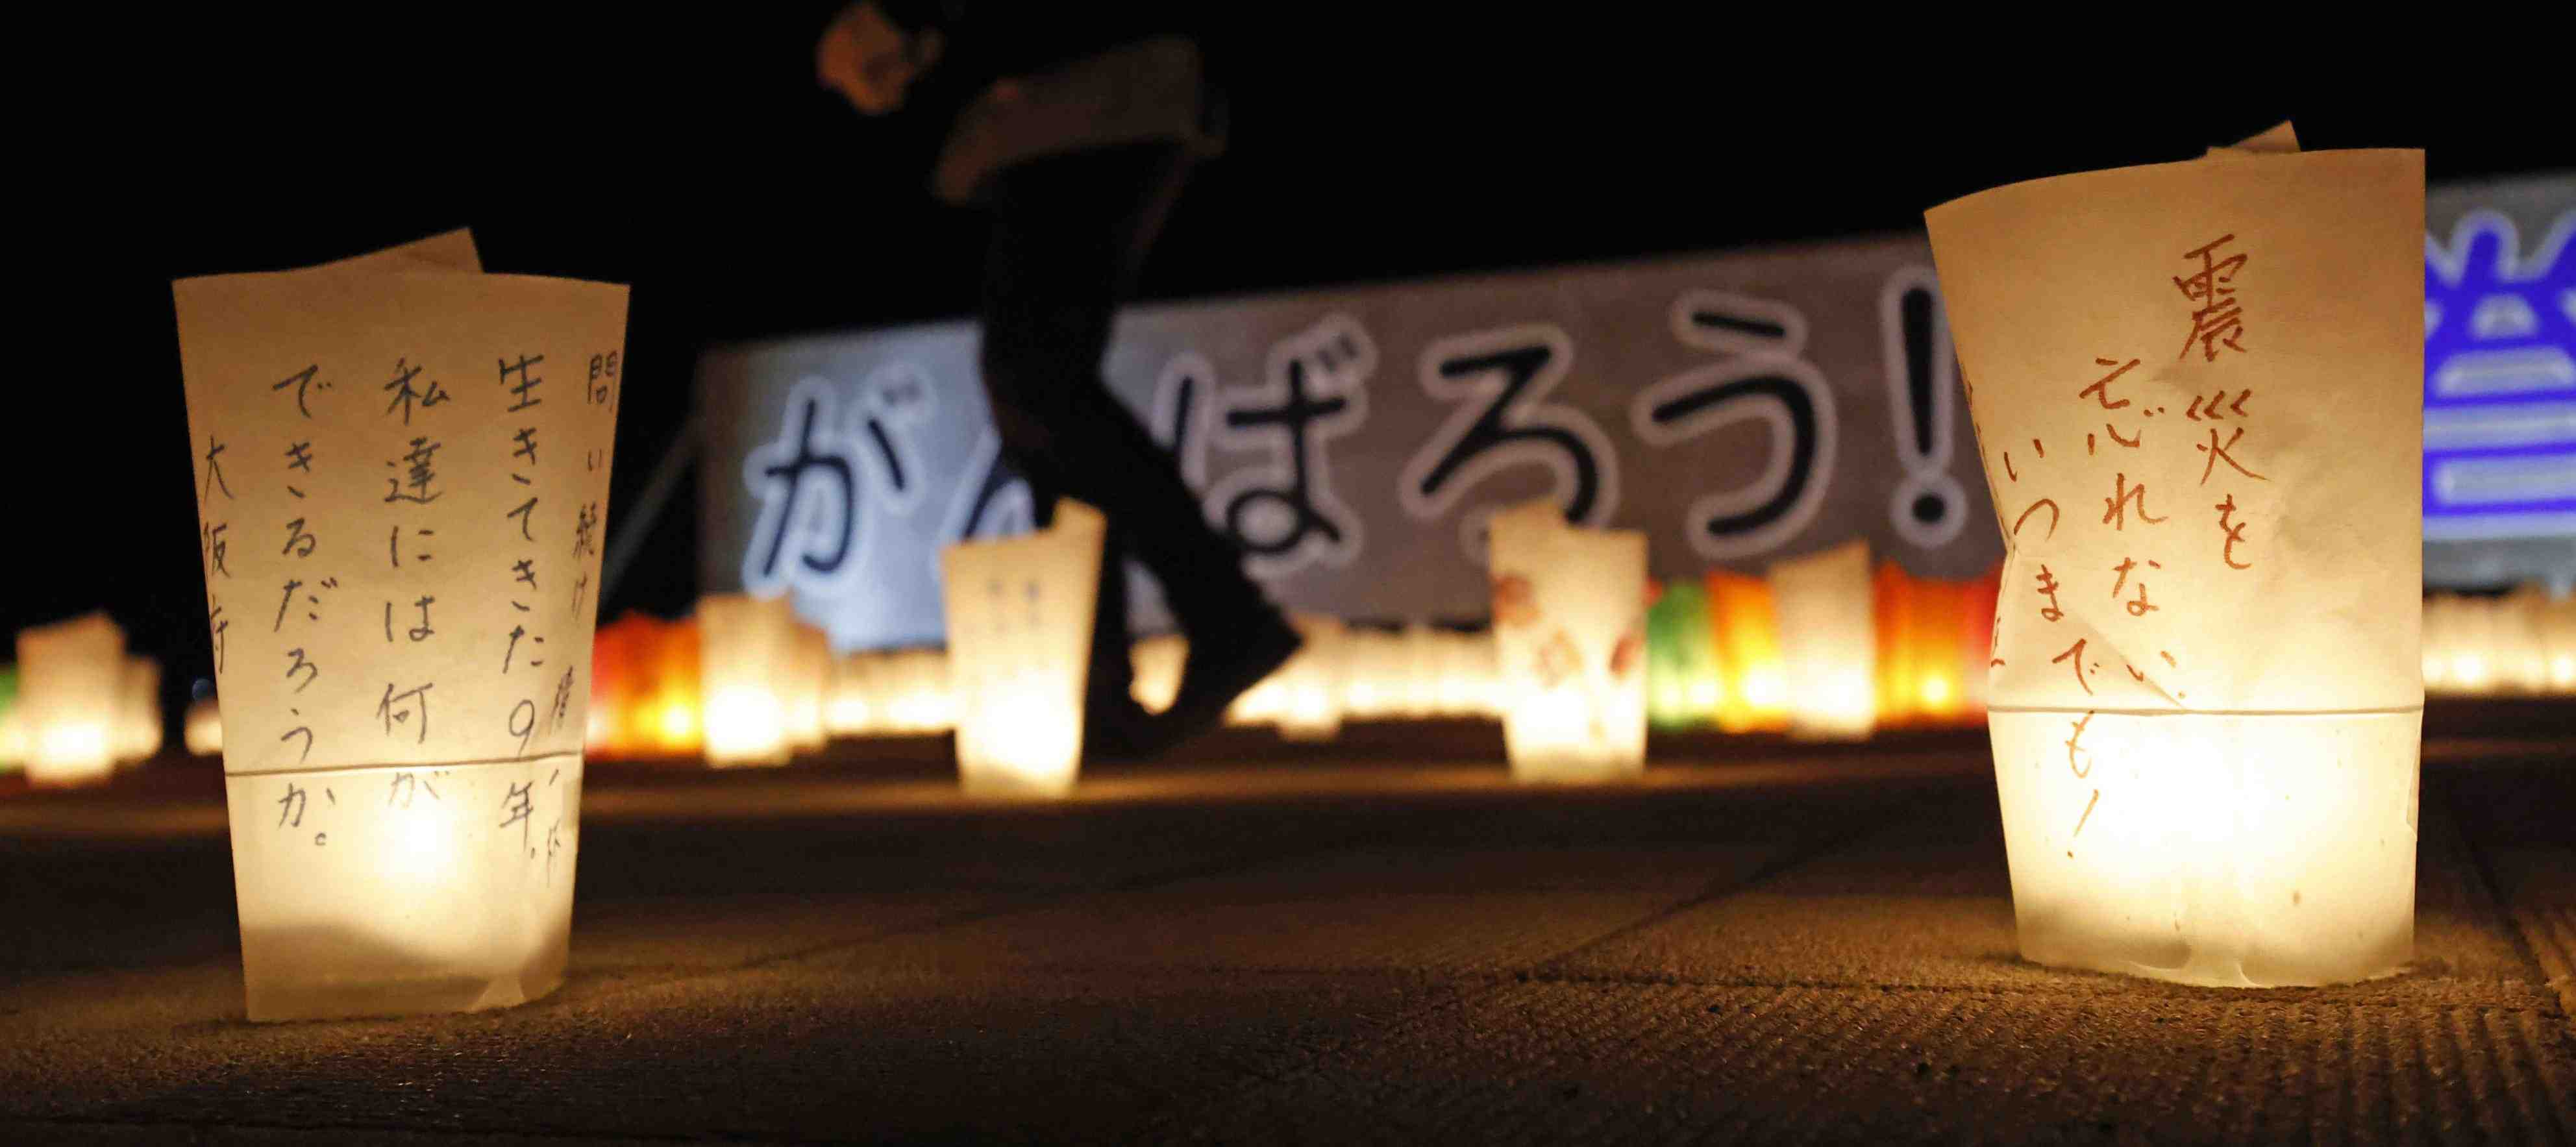 Japan 3.11 Anniversary The Great Tohoku Earthquake 023